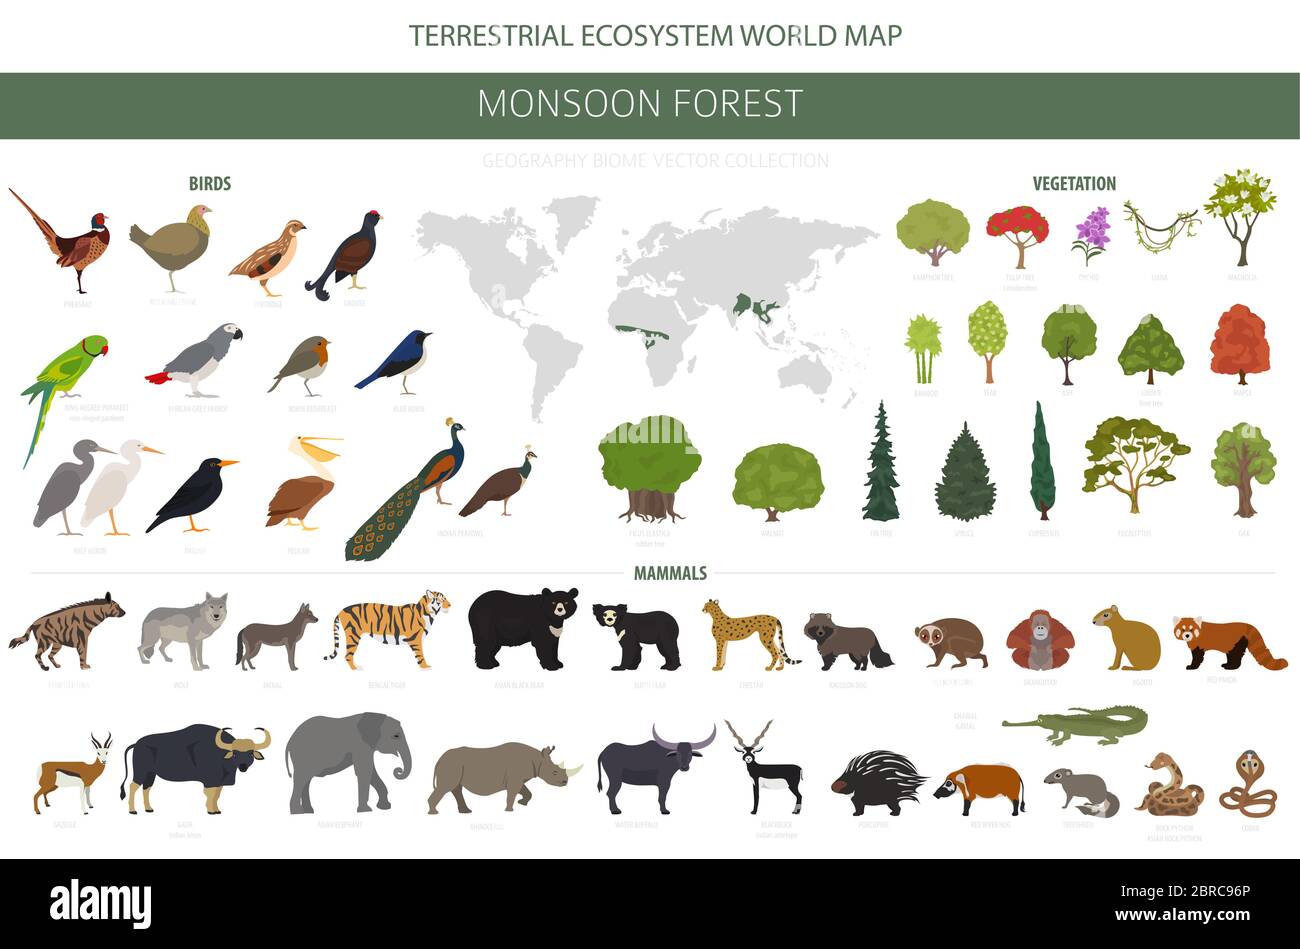 Monsoon forest biome, natural region infographic. Terrestrial ecosystem world map. Animals, birds and vegetations design set. Vector illustration Stock Vector